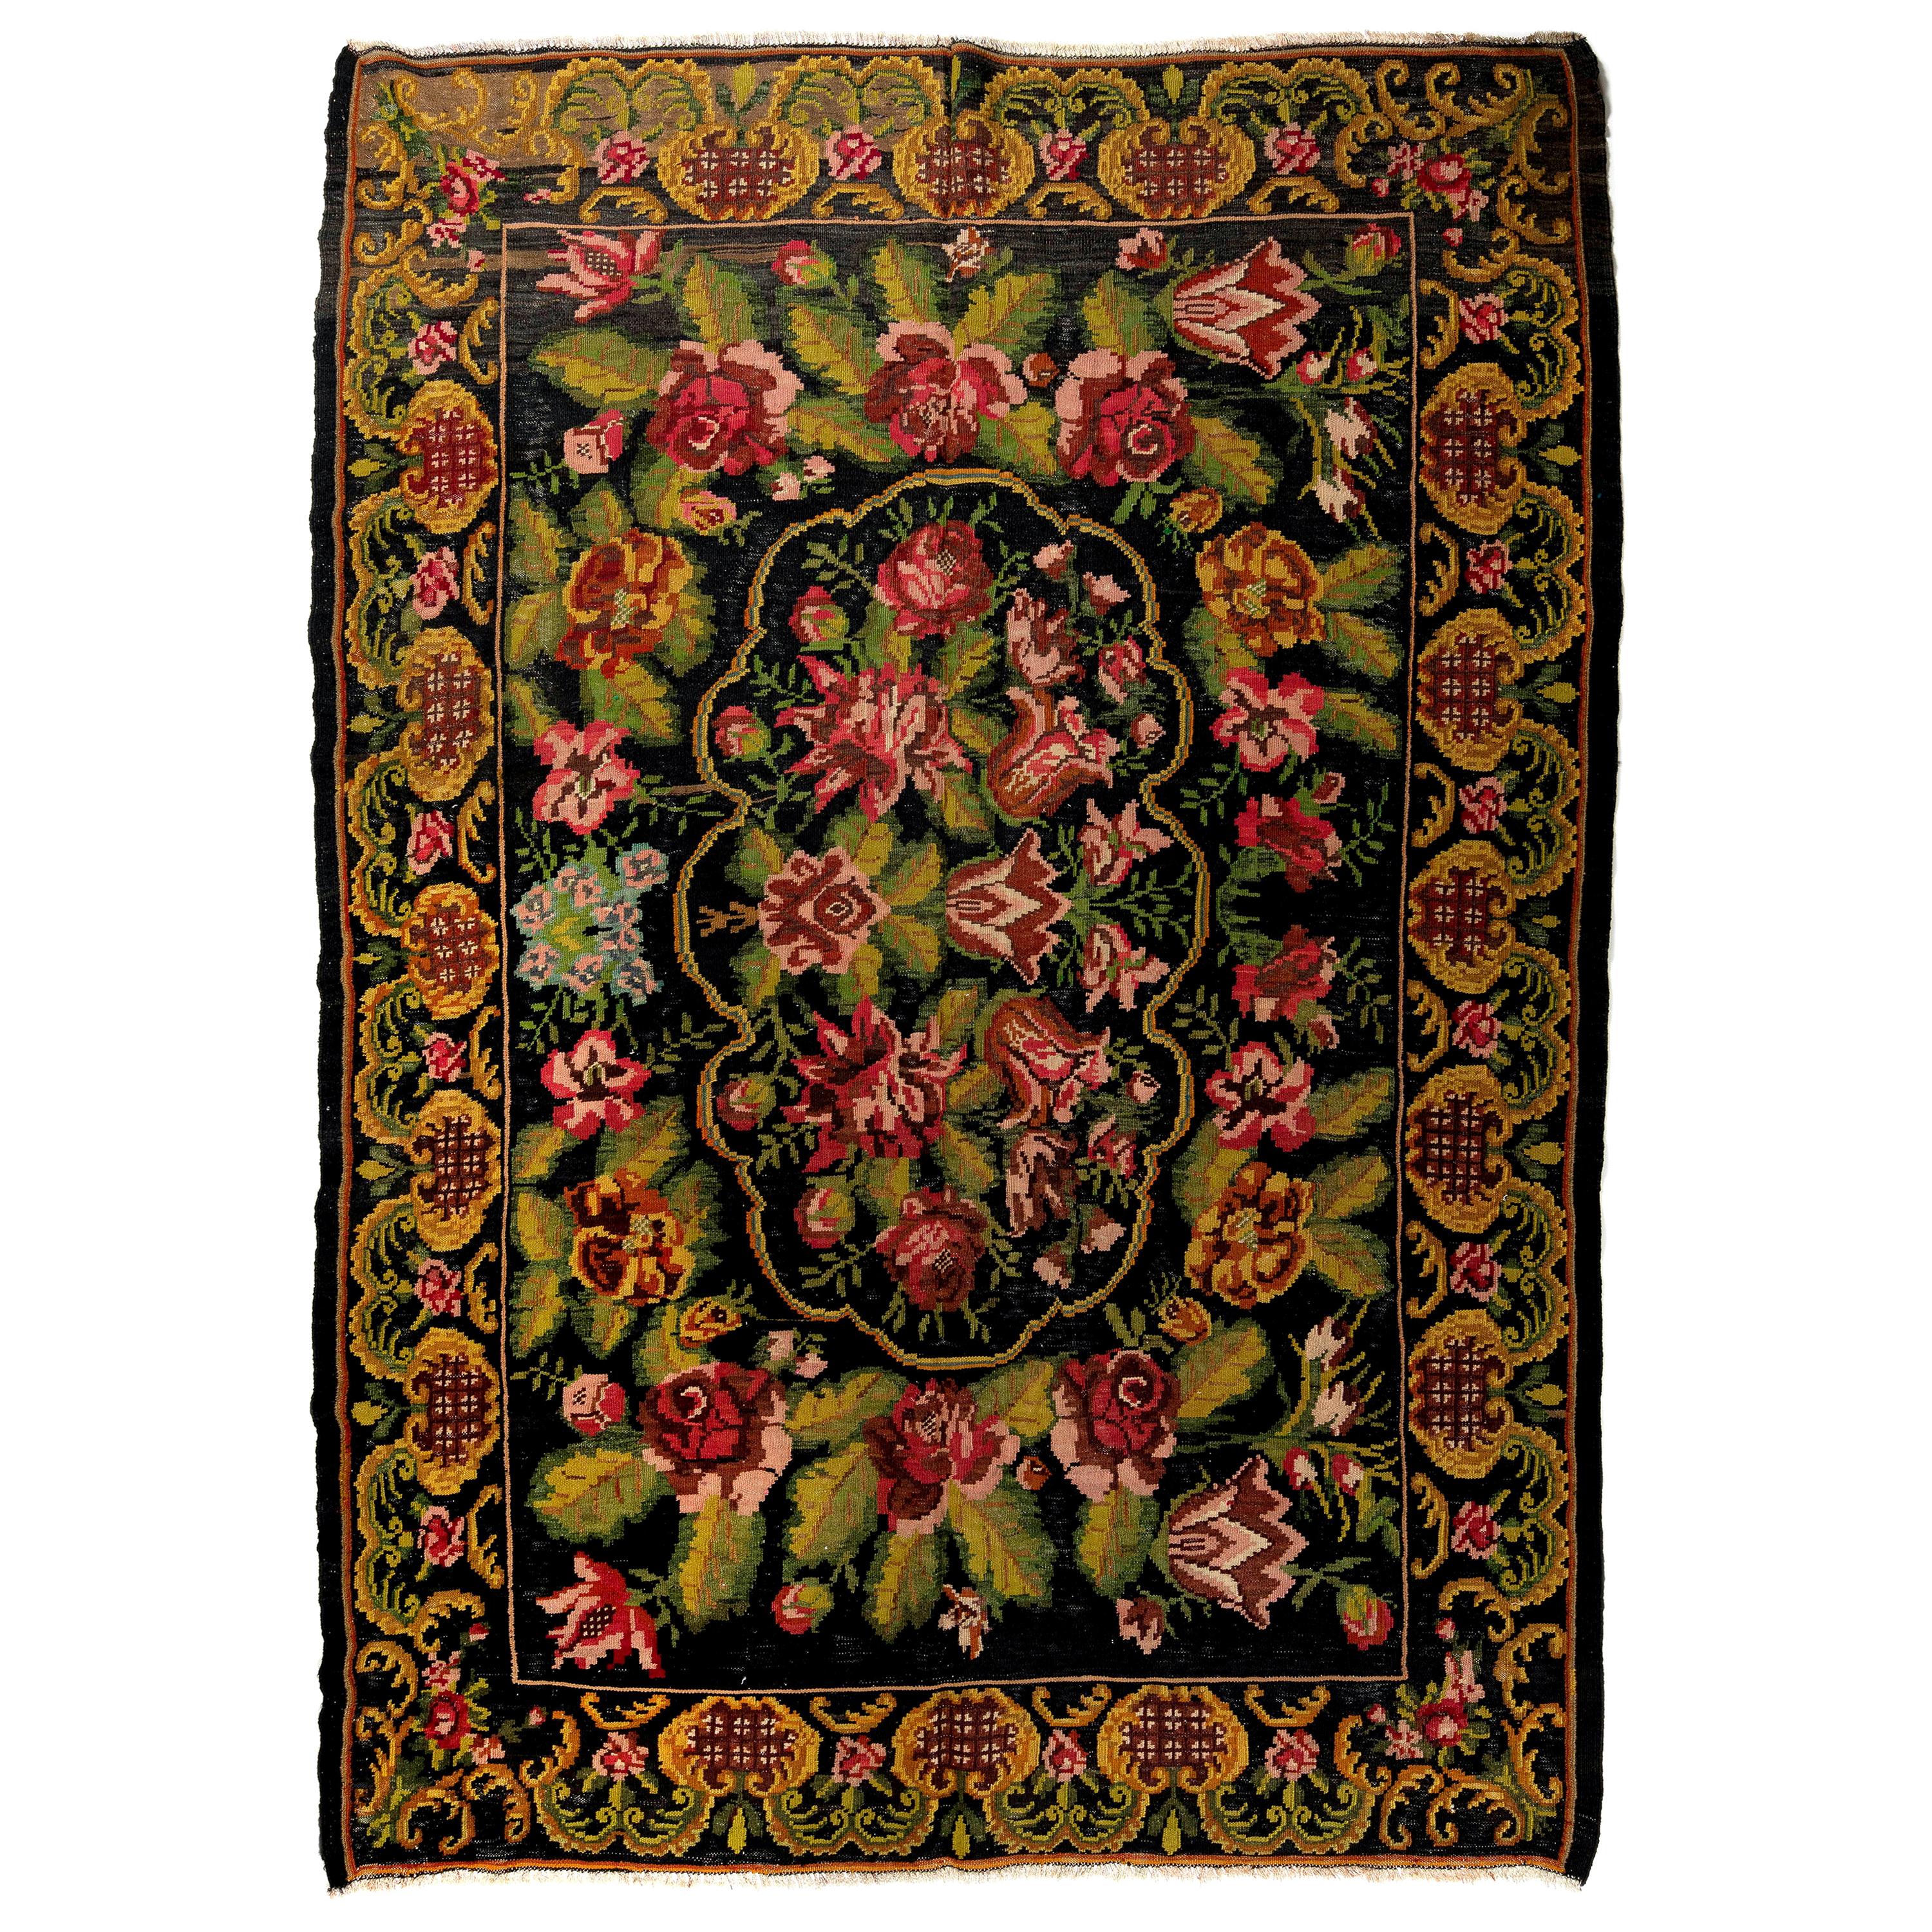 6.9x9.4 Ft Eastern European Bessarabian Kilim, Floral Vintage Handwoven Tapestry